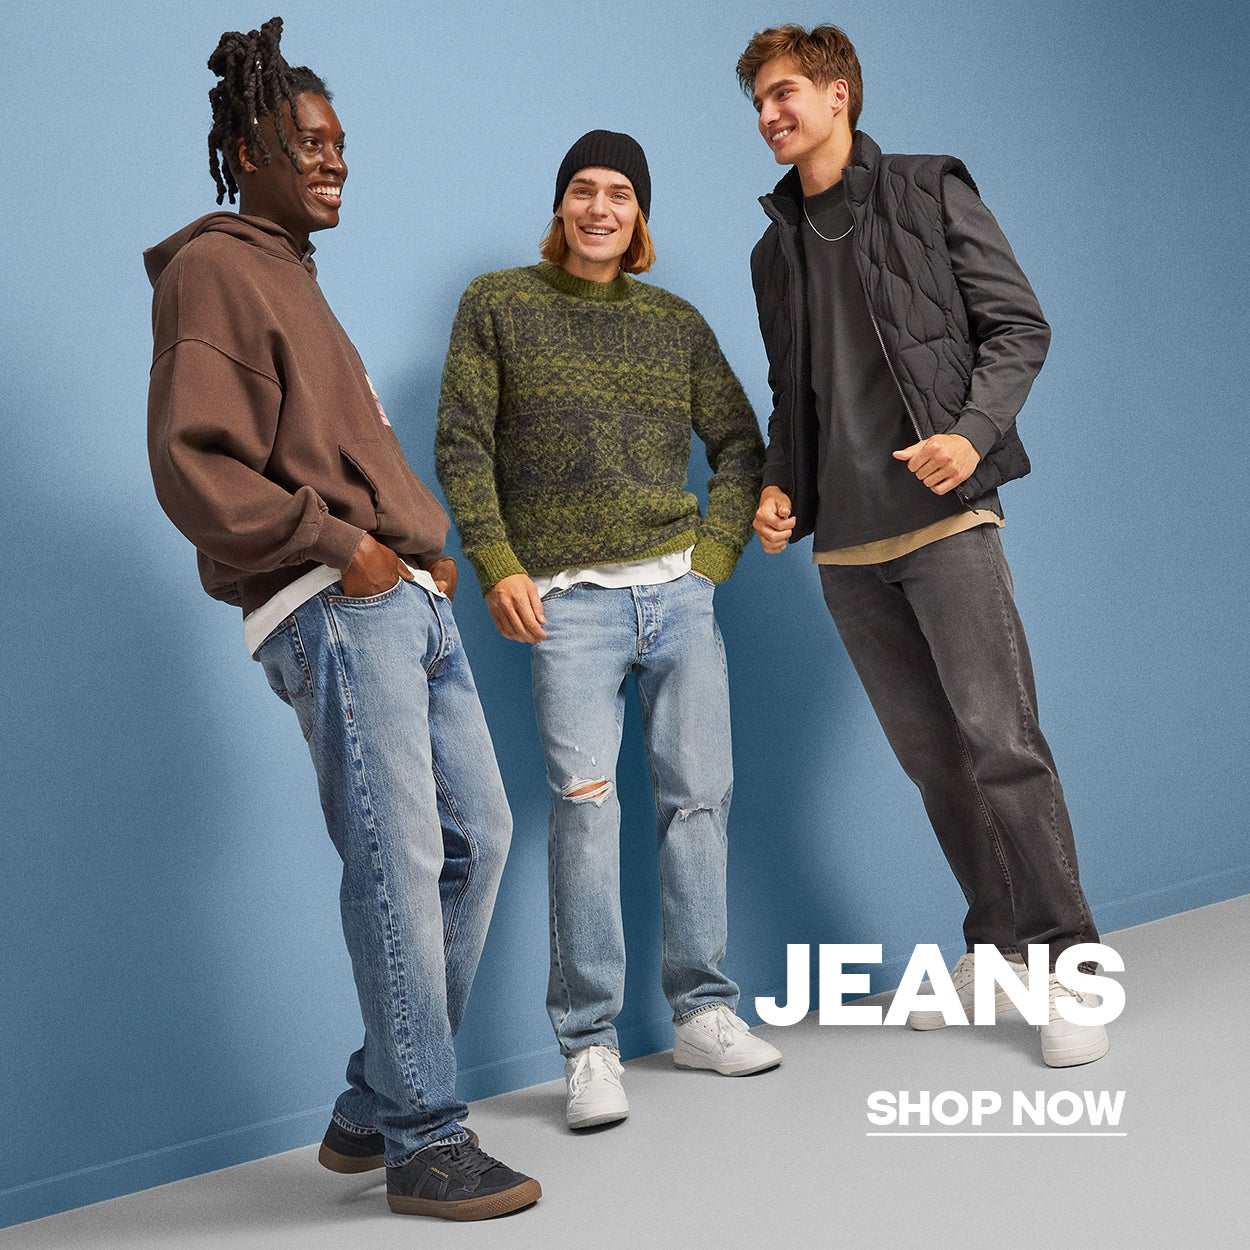 JACK & JONES - Men's Clothing & Shoes | Official Website